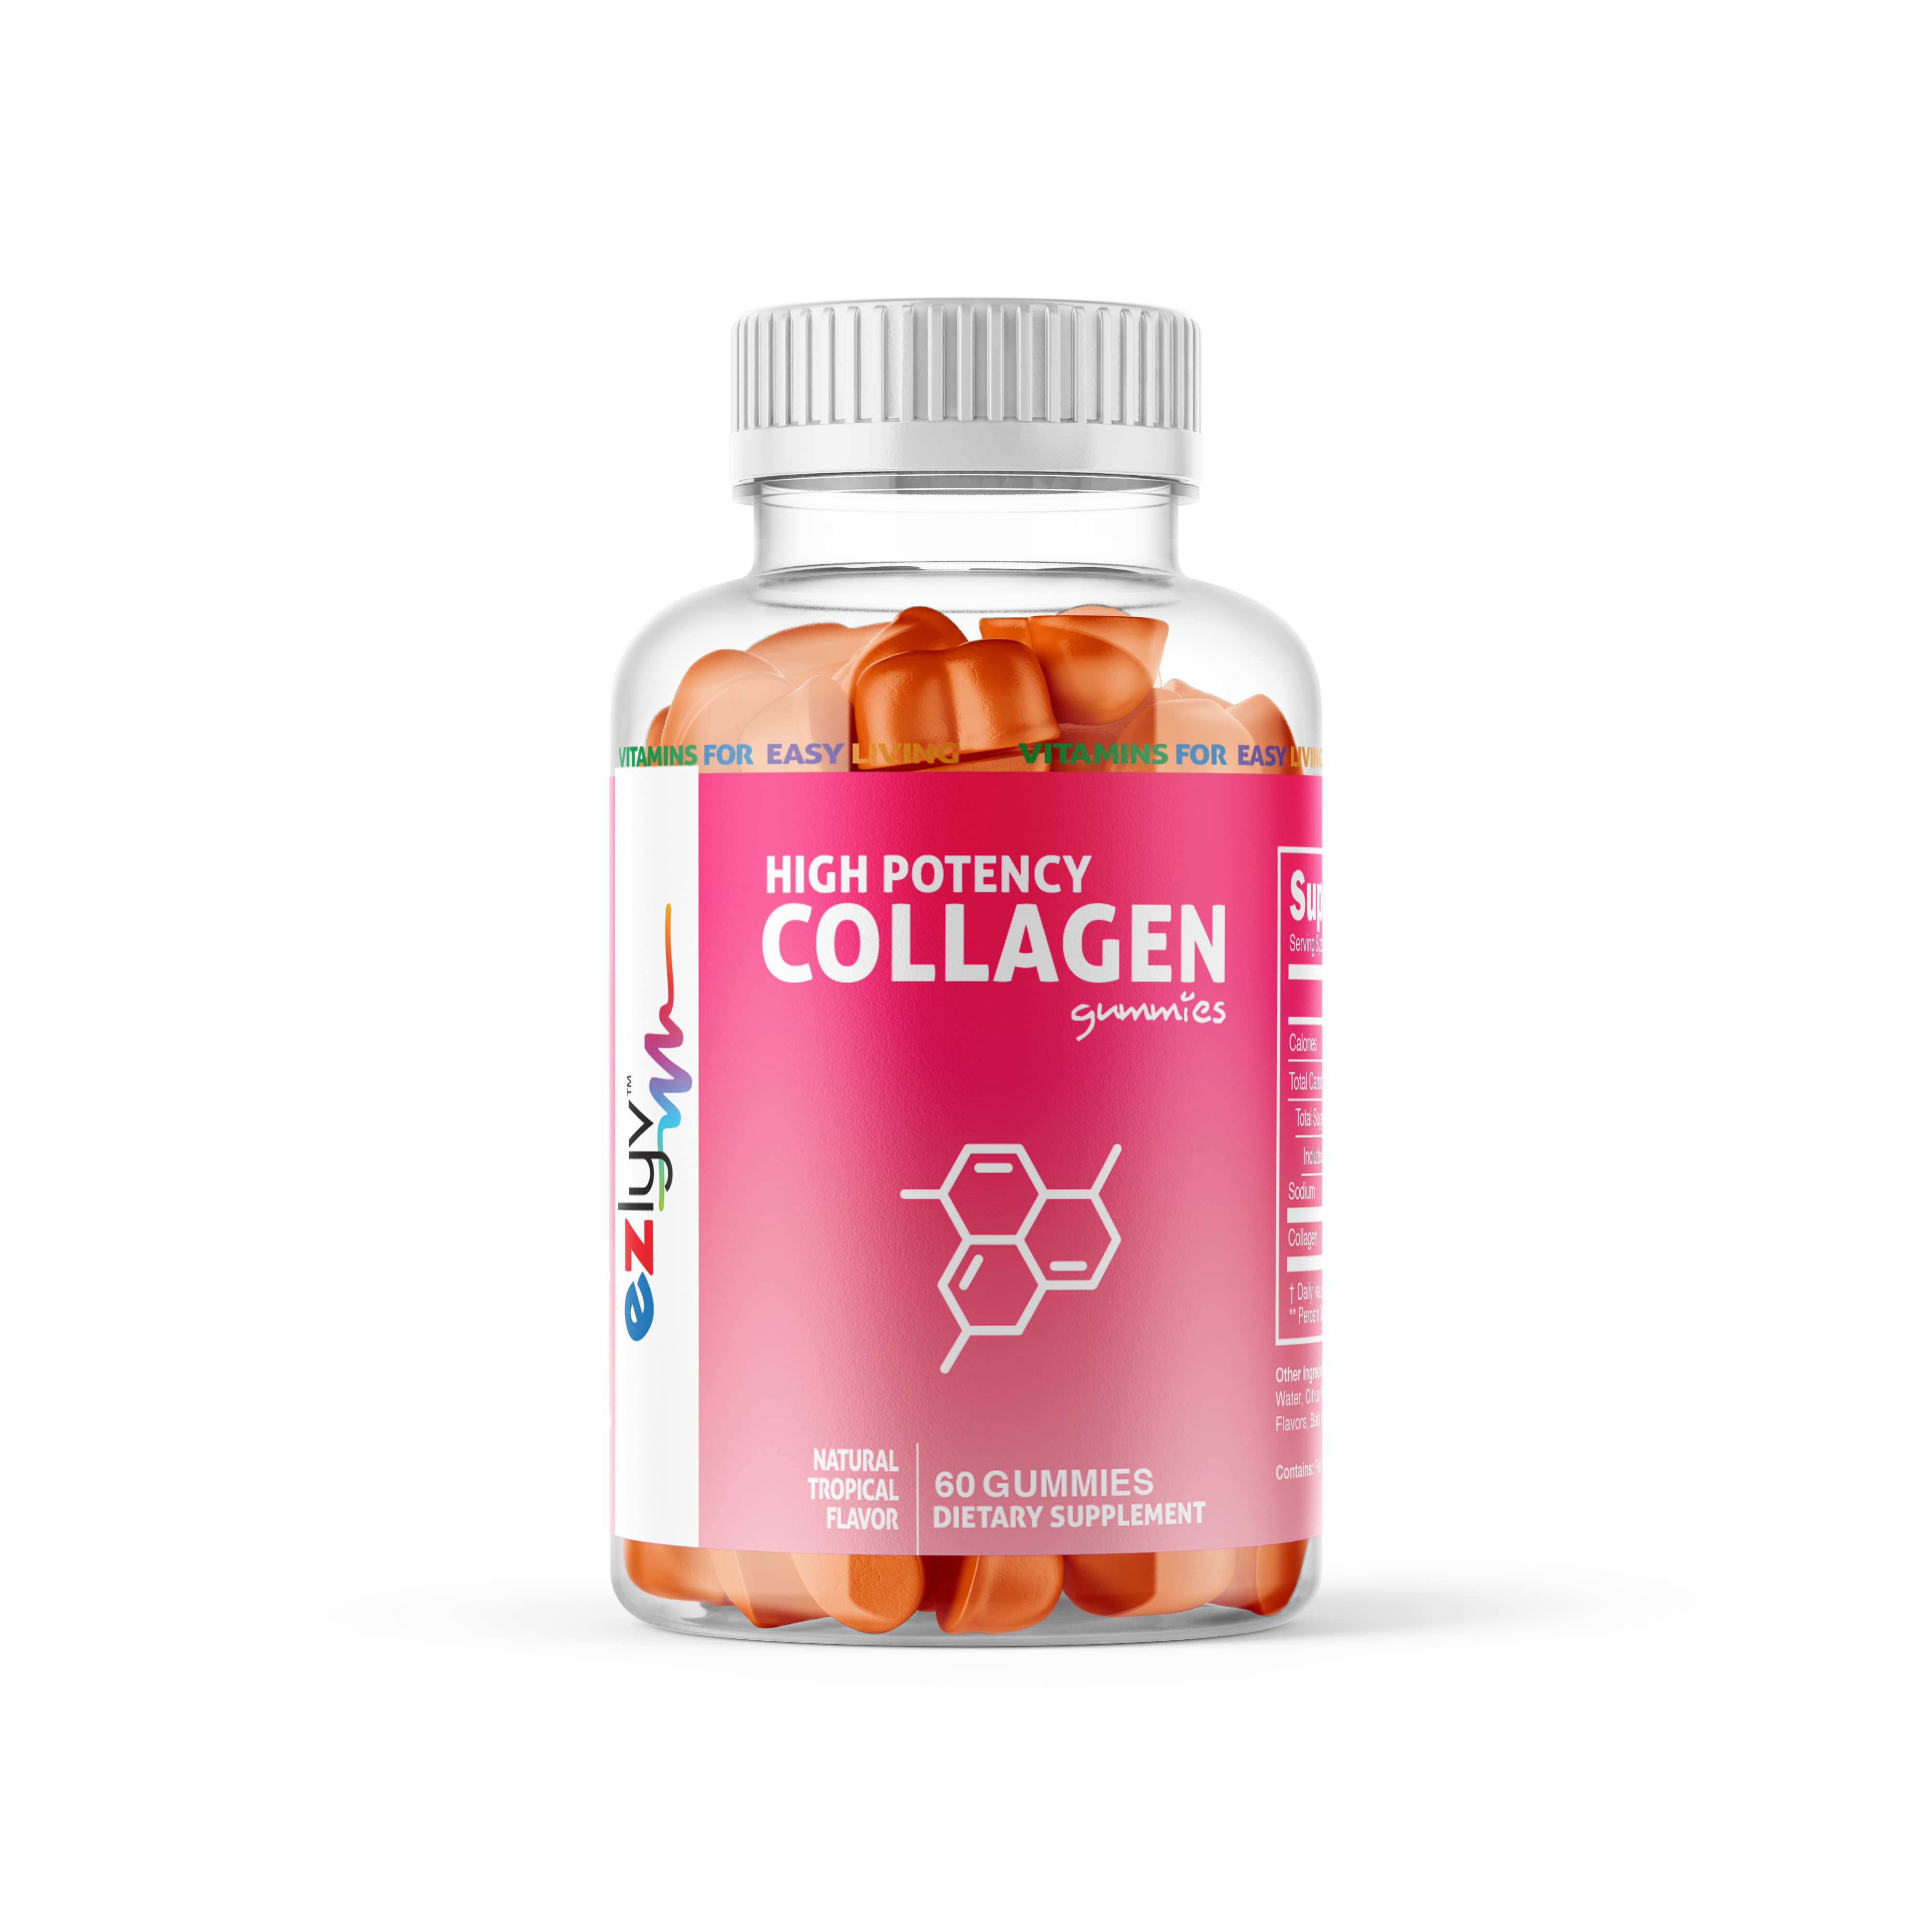 High Potency Collagen